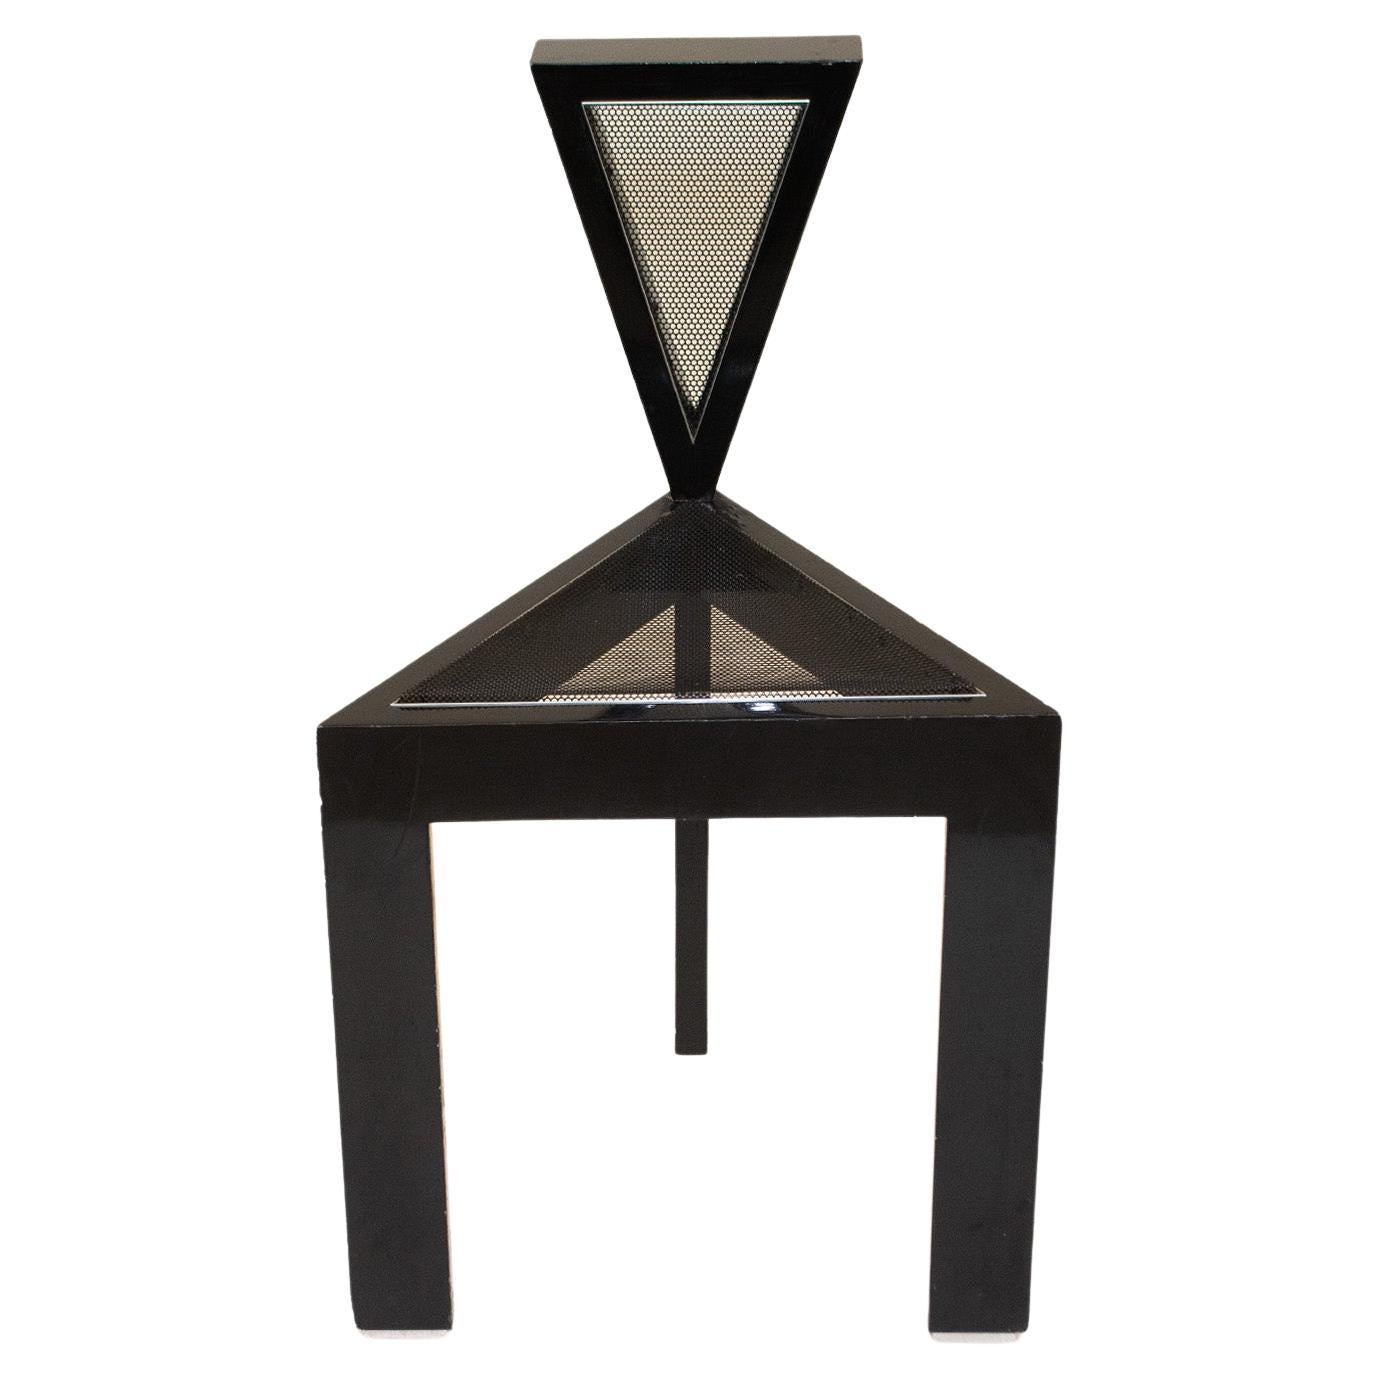 Chaise triangulaire moderniste de style Memphis de Carl Tese  en vente